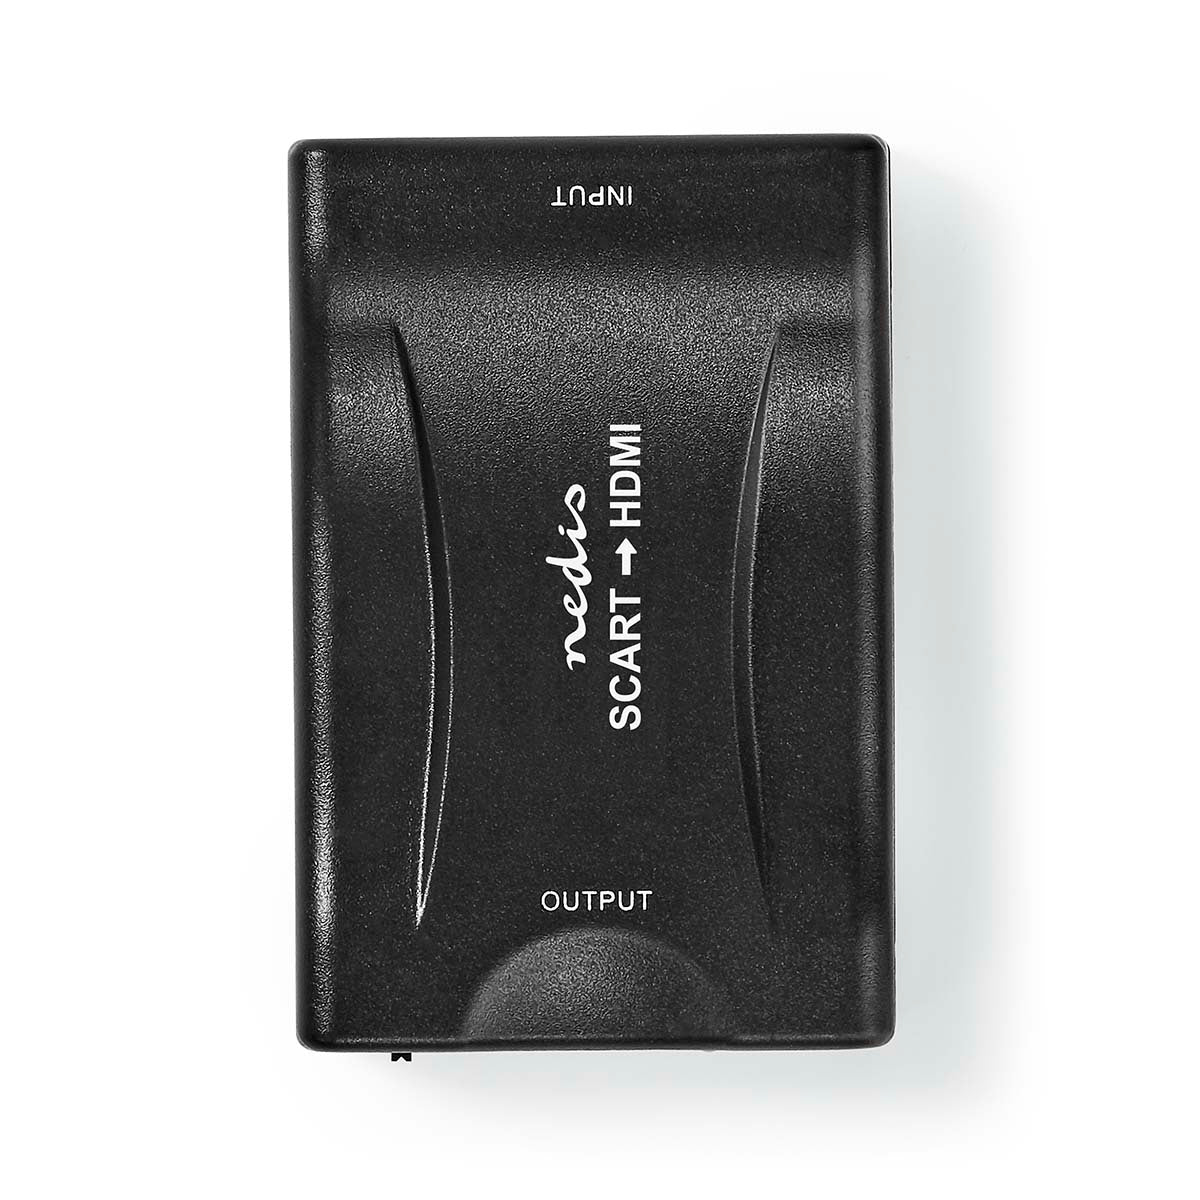 Conversor HDMI ABS Preto | 1080p 1,2 Gbps